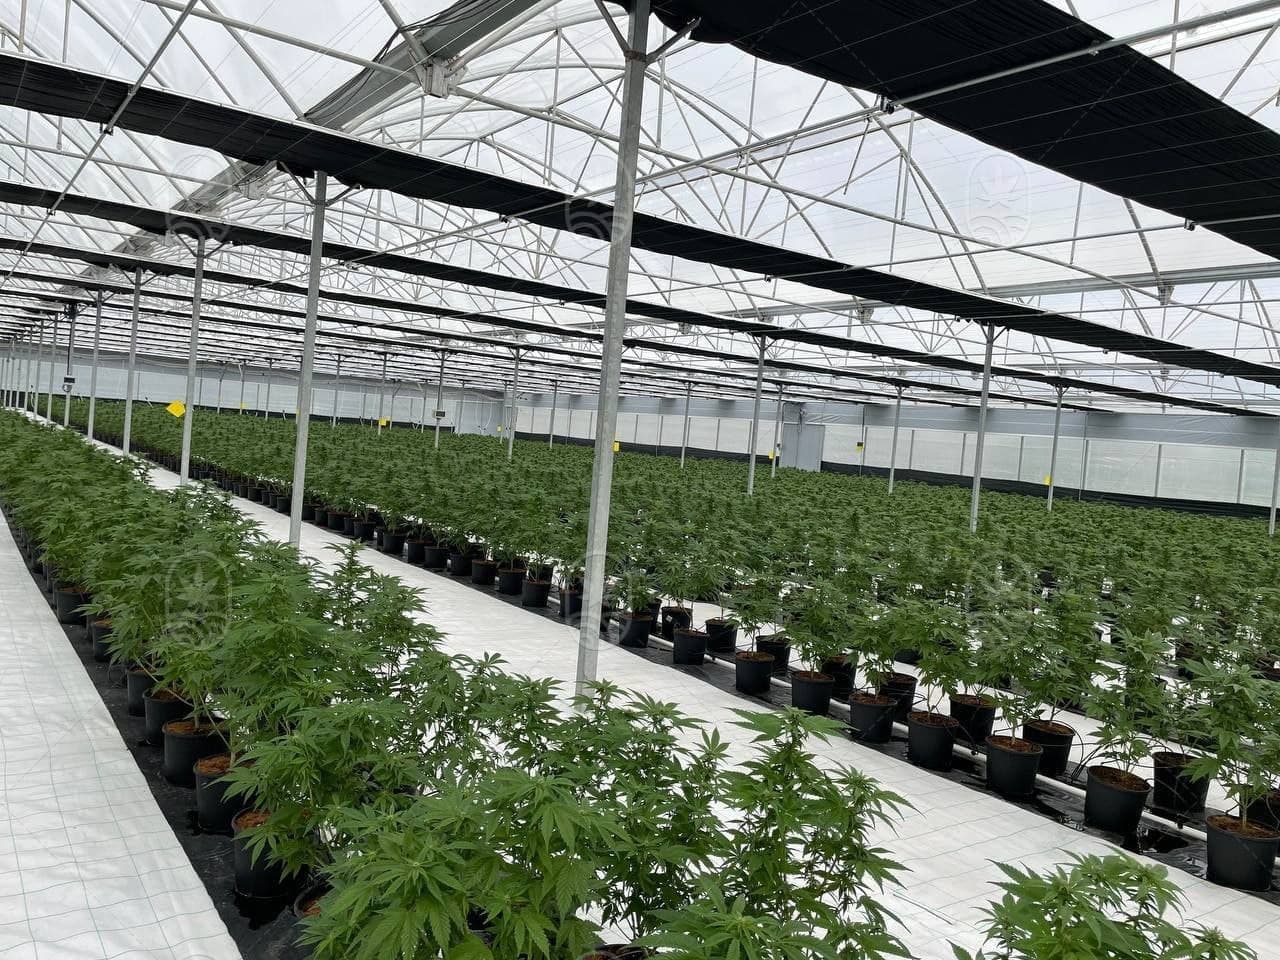 JuicyFields - Cannabisplanten din kan også vokse her